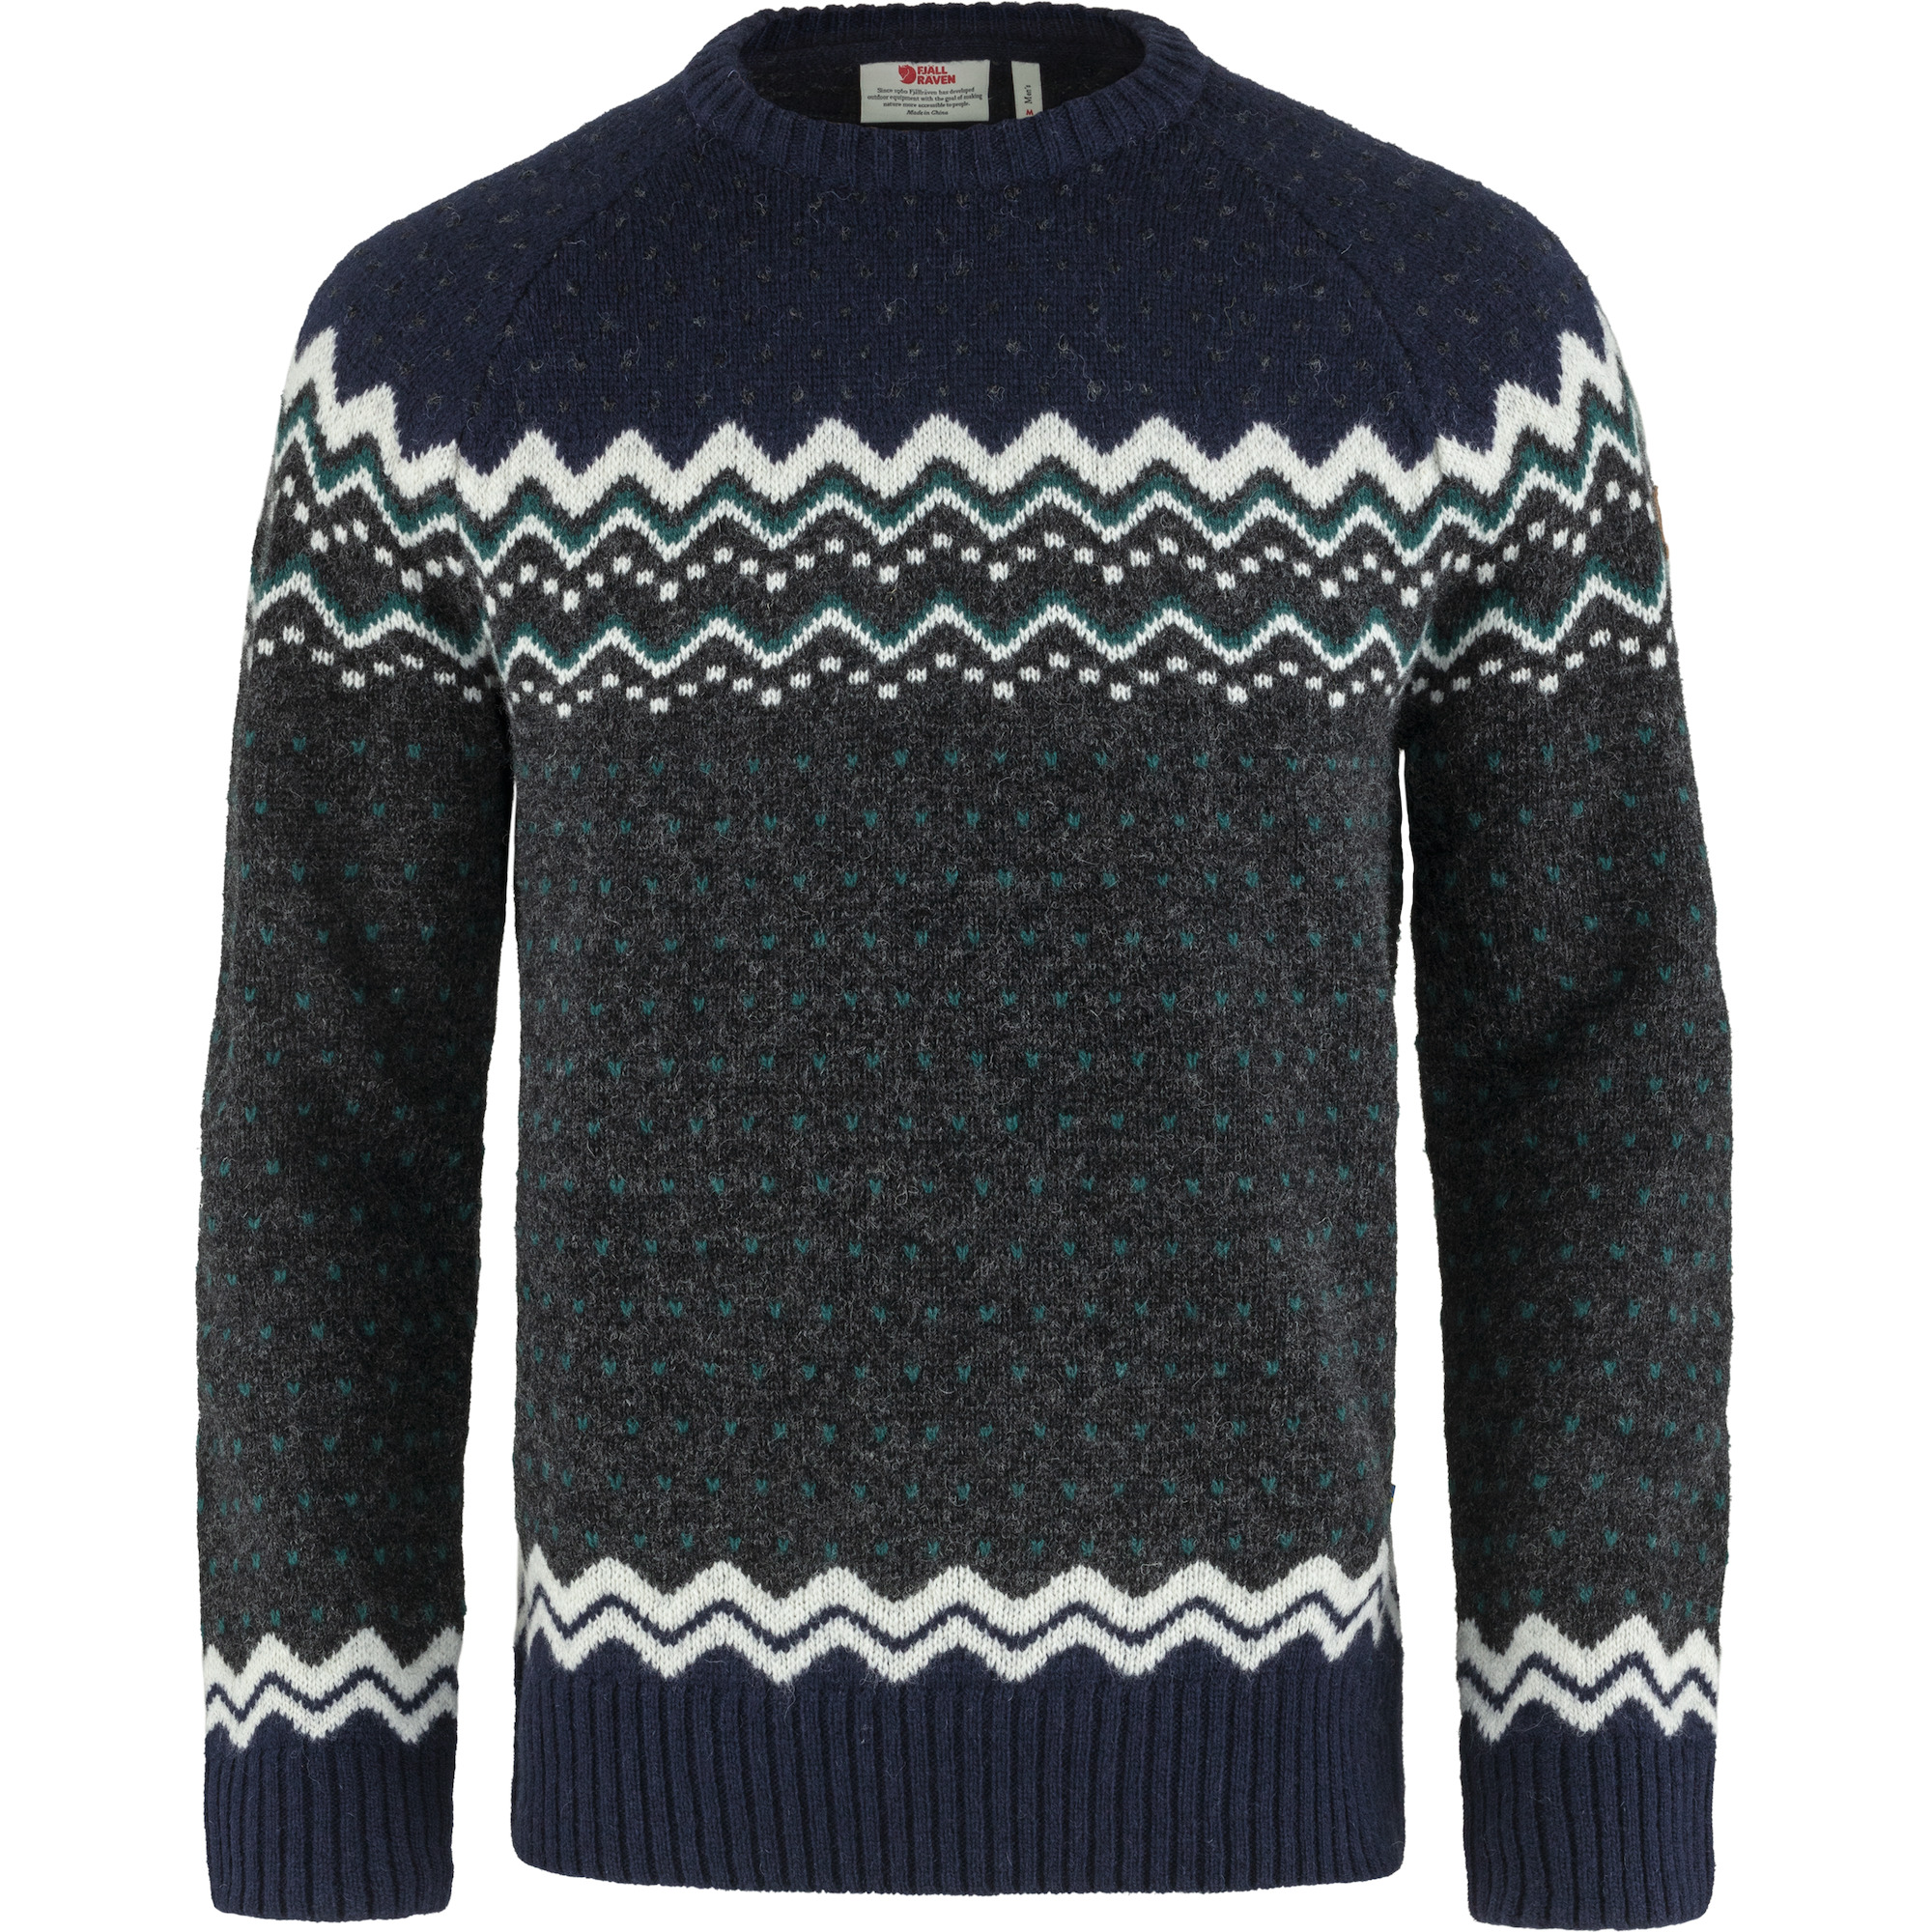 MEN FASHION Jumpers & Sweatshirts Knitted Navy Blue M discount 94% Ocean jumper 